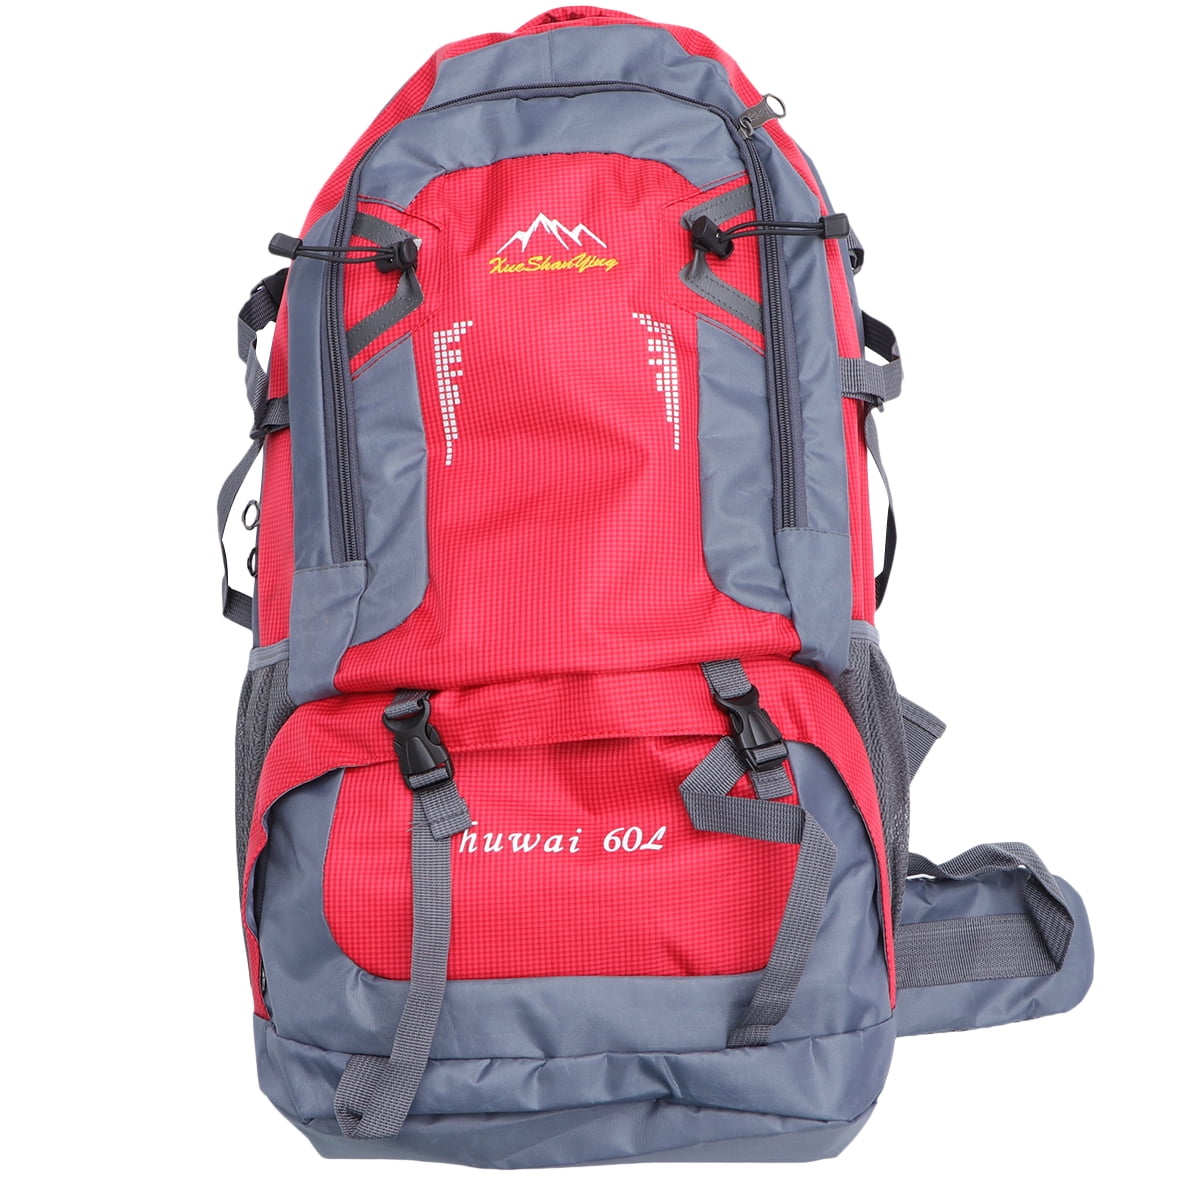 Kimetsu No Yaiba Backpack Casual Bags Gym Travel Hiking Canvas Backpack School Bag 